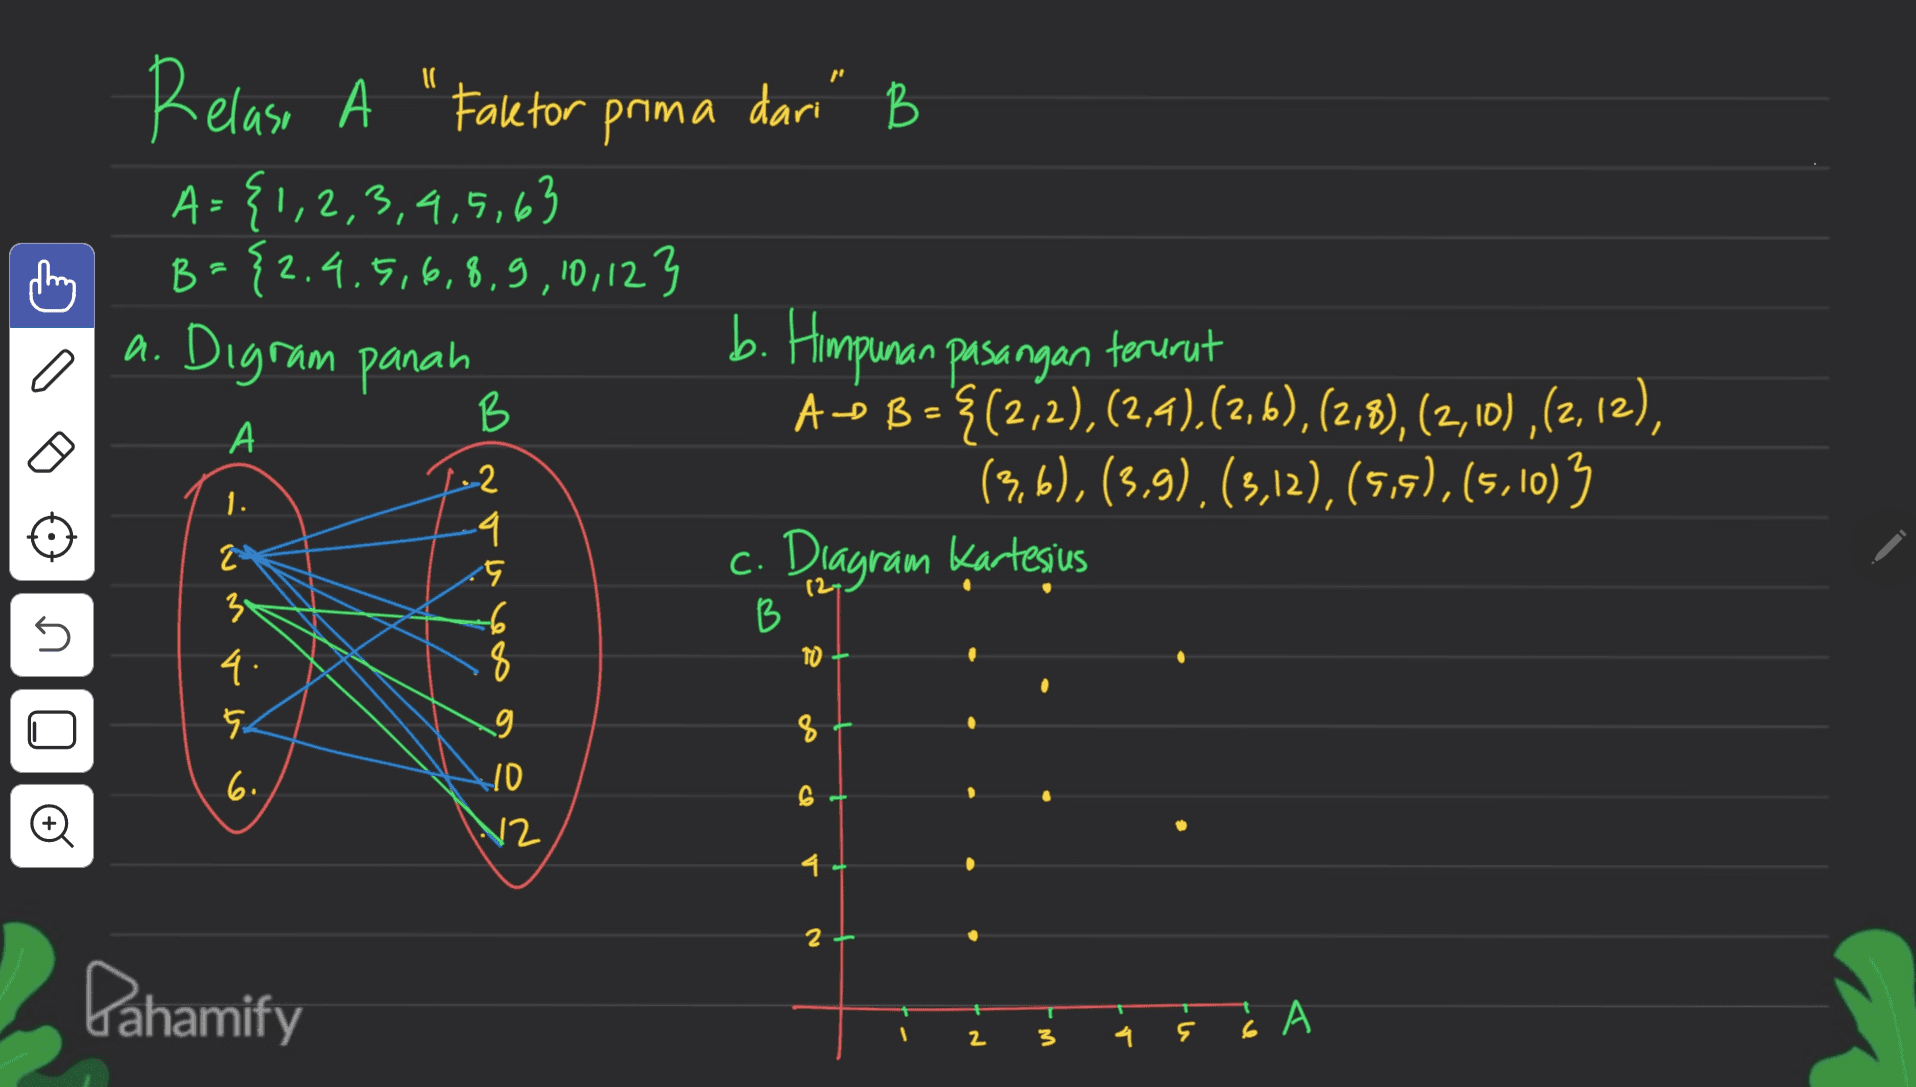 В . a. Digram panah Relase A "Fale for prima dari" B A={1,2,3,4,5,63 B={2.4.5,6,8,9,10,12} B { b. Himpunan pasangan terurut A ÓB=< (2/2),(2,4),(2,6),(2,8), (2,10),(2, 12), (3,6), (3,9), (3,12), (5,5), (5,10)3 c. Diagram Kartesius b B А 1. 2 3. .2 4 . 6 8 12 B 5 TO 4: 5 8 _8 9 10 6. 6 V2 4 2 Pahamify LA 2 3 4 s 